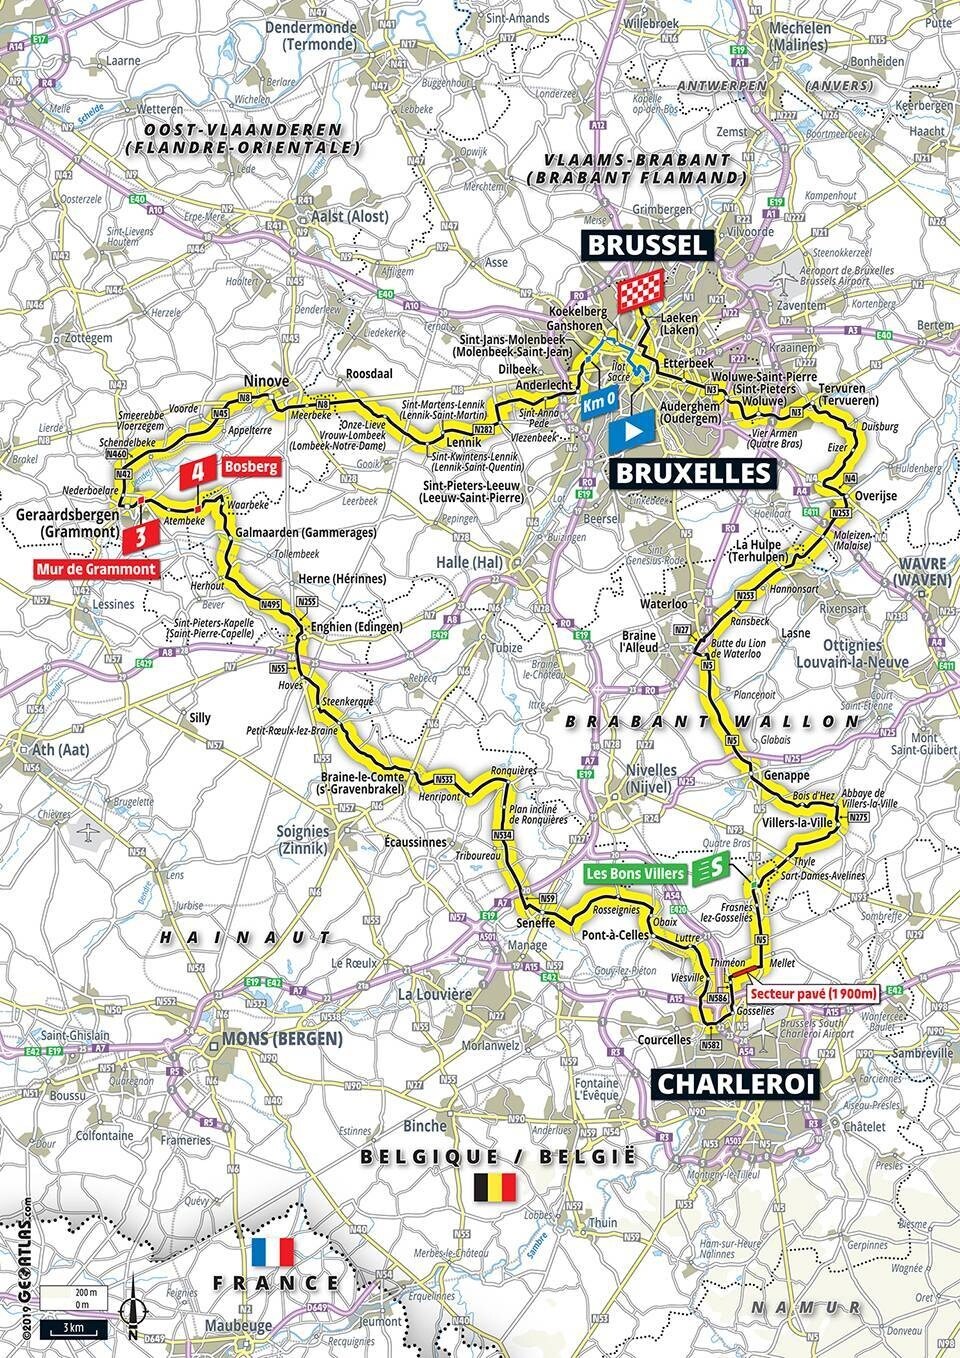 Tour de France 2019 - Planimetria Tappa 1